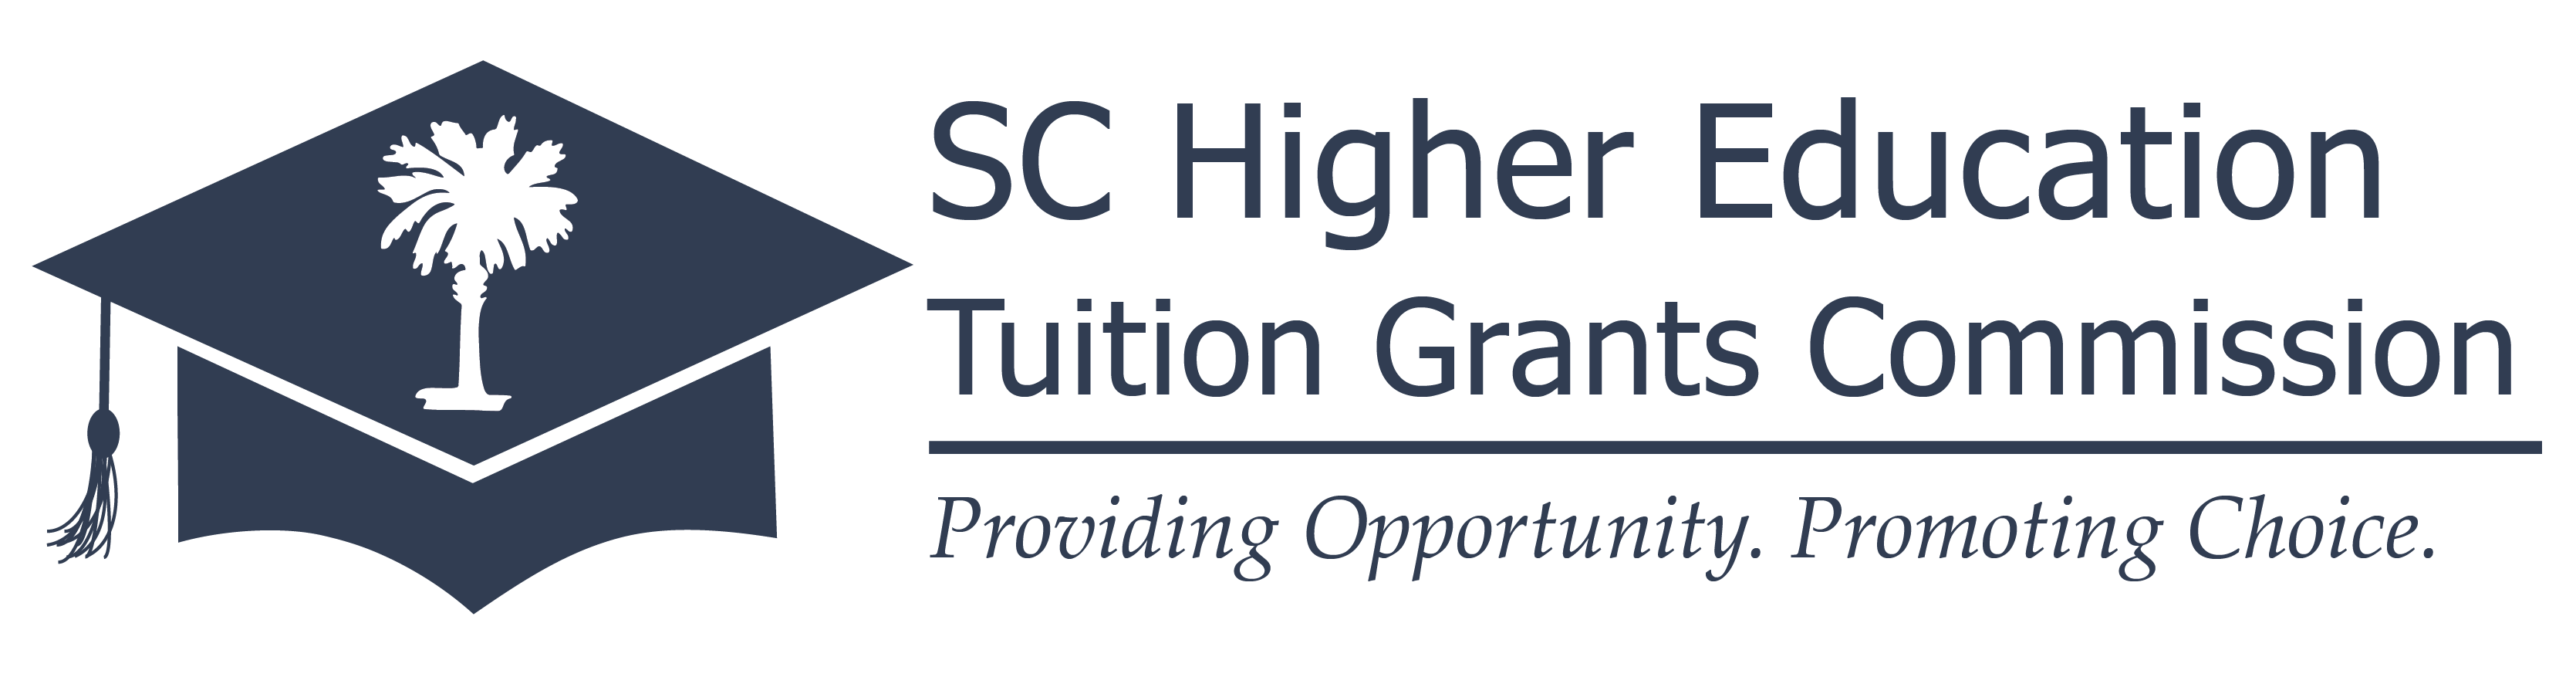 South Carolina Tuition Grants